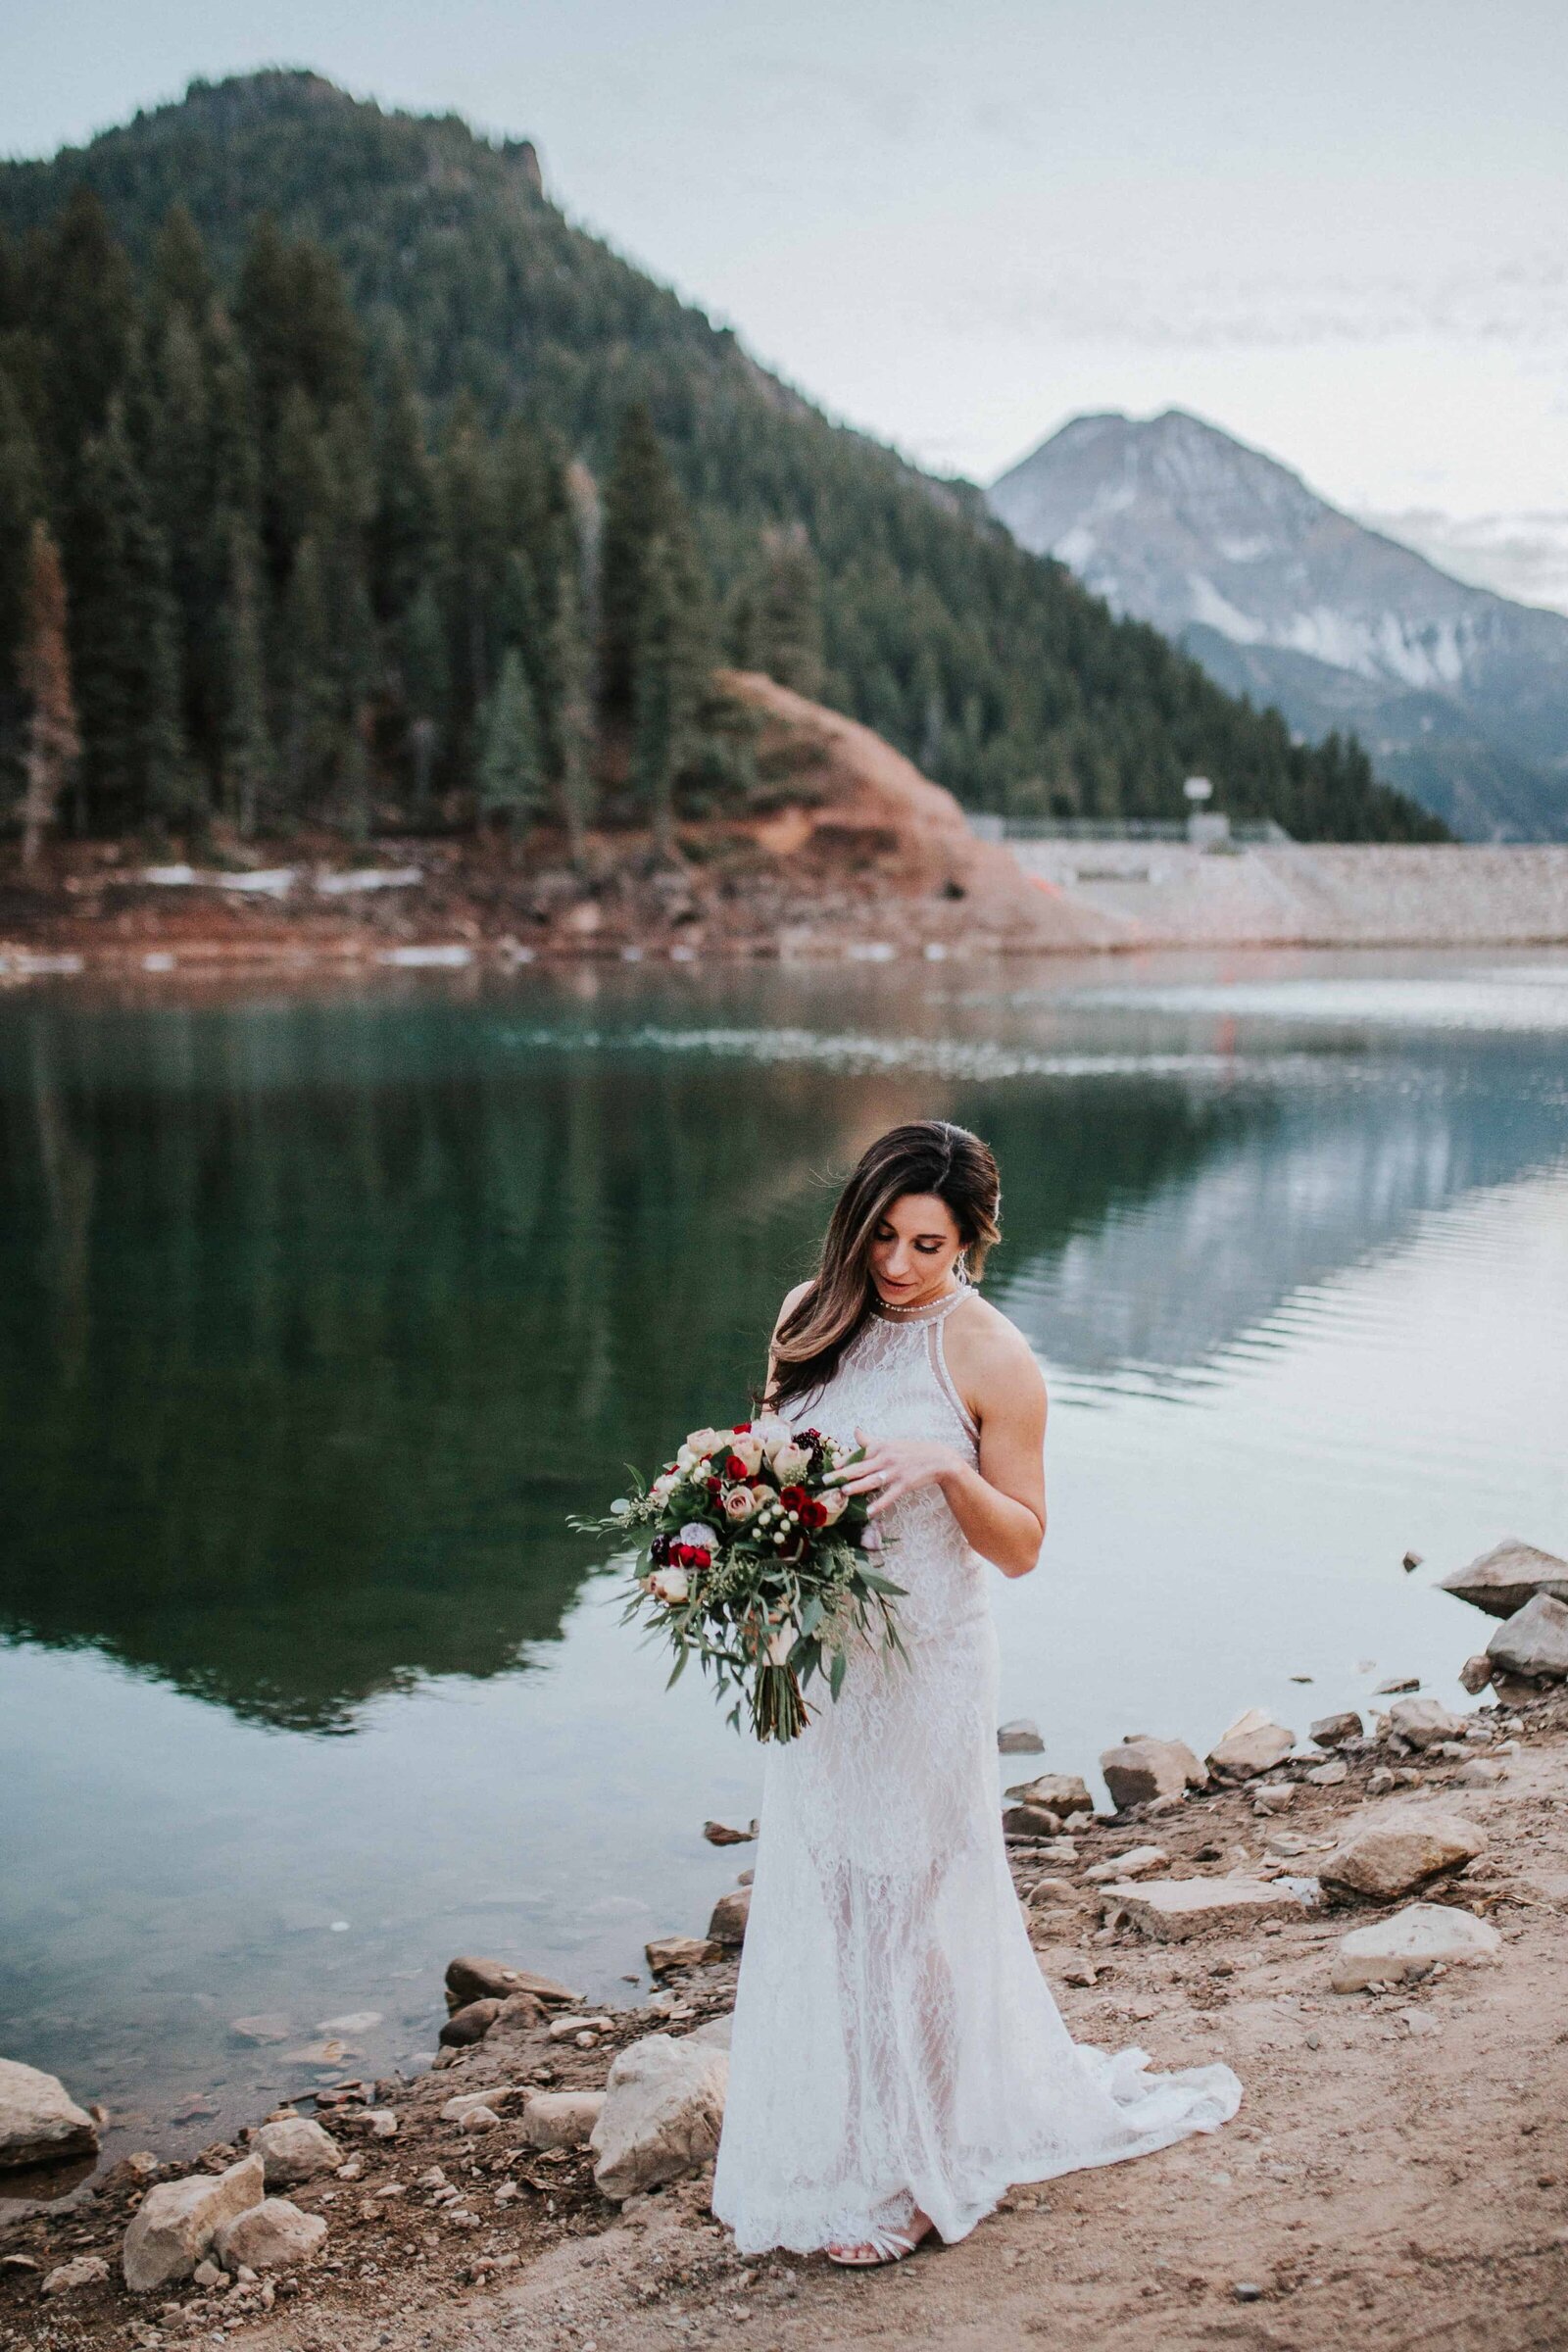 Sacramento Wedding Photographer captures bride holding bridal bouquet during outdoor bridal portraits